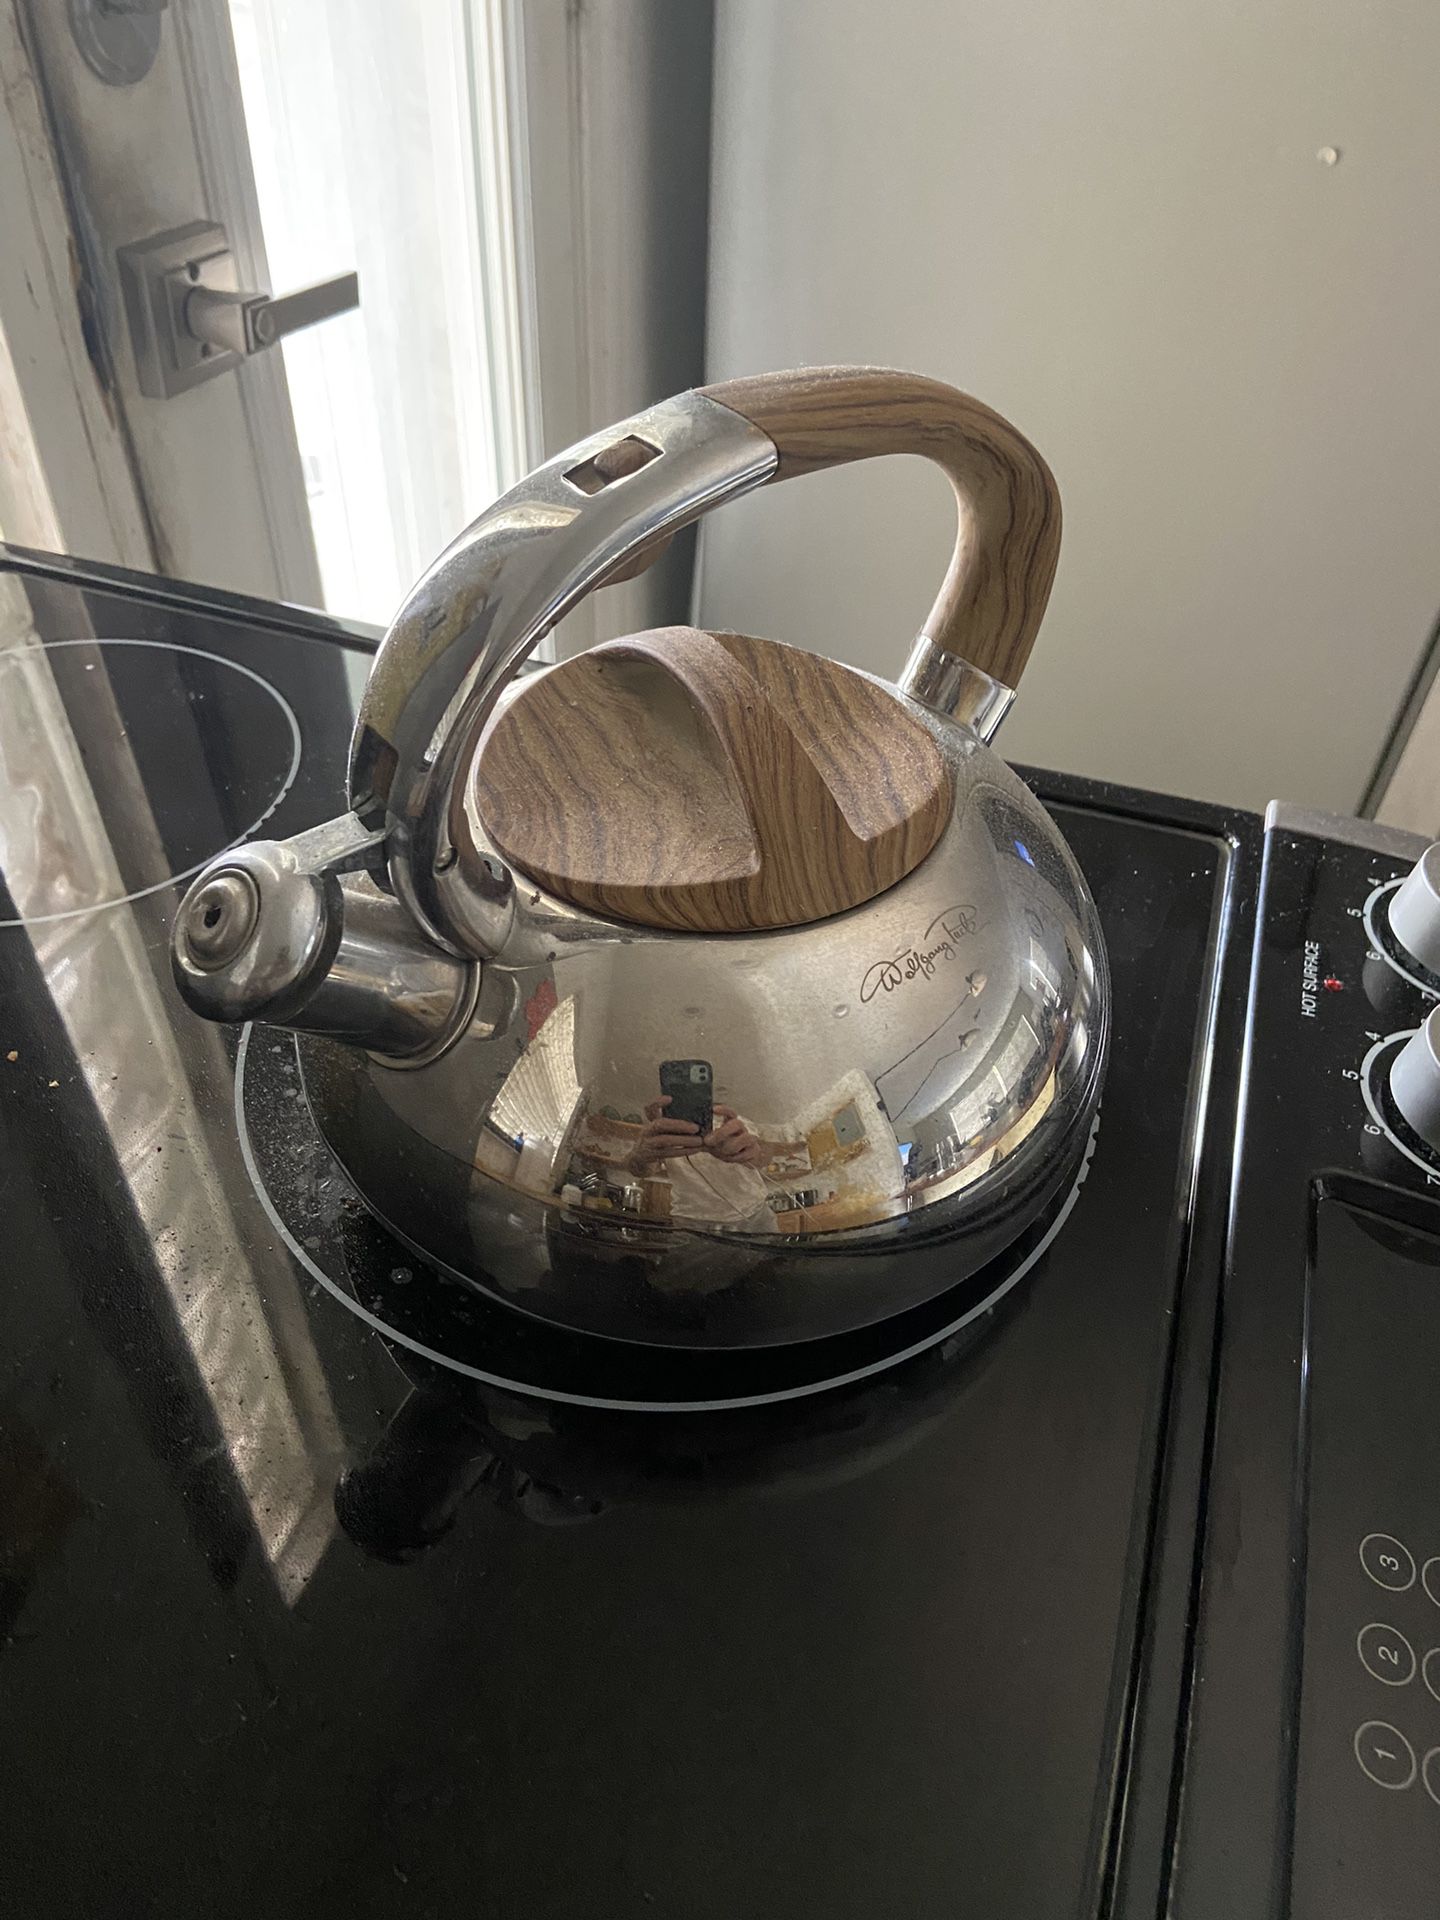 Brand new tea kettle Wolfgang puck